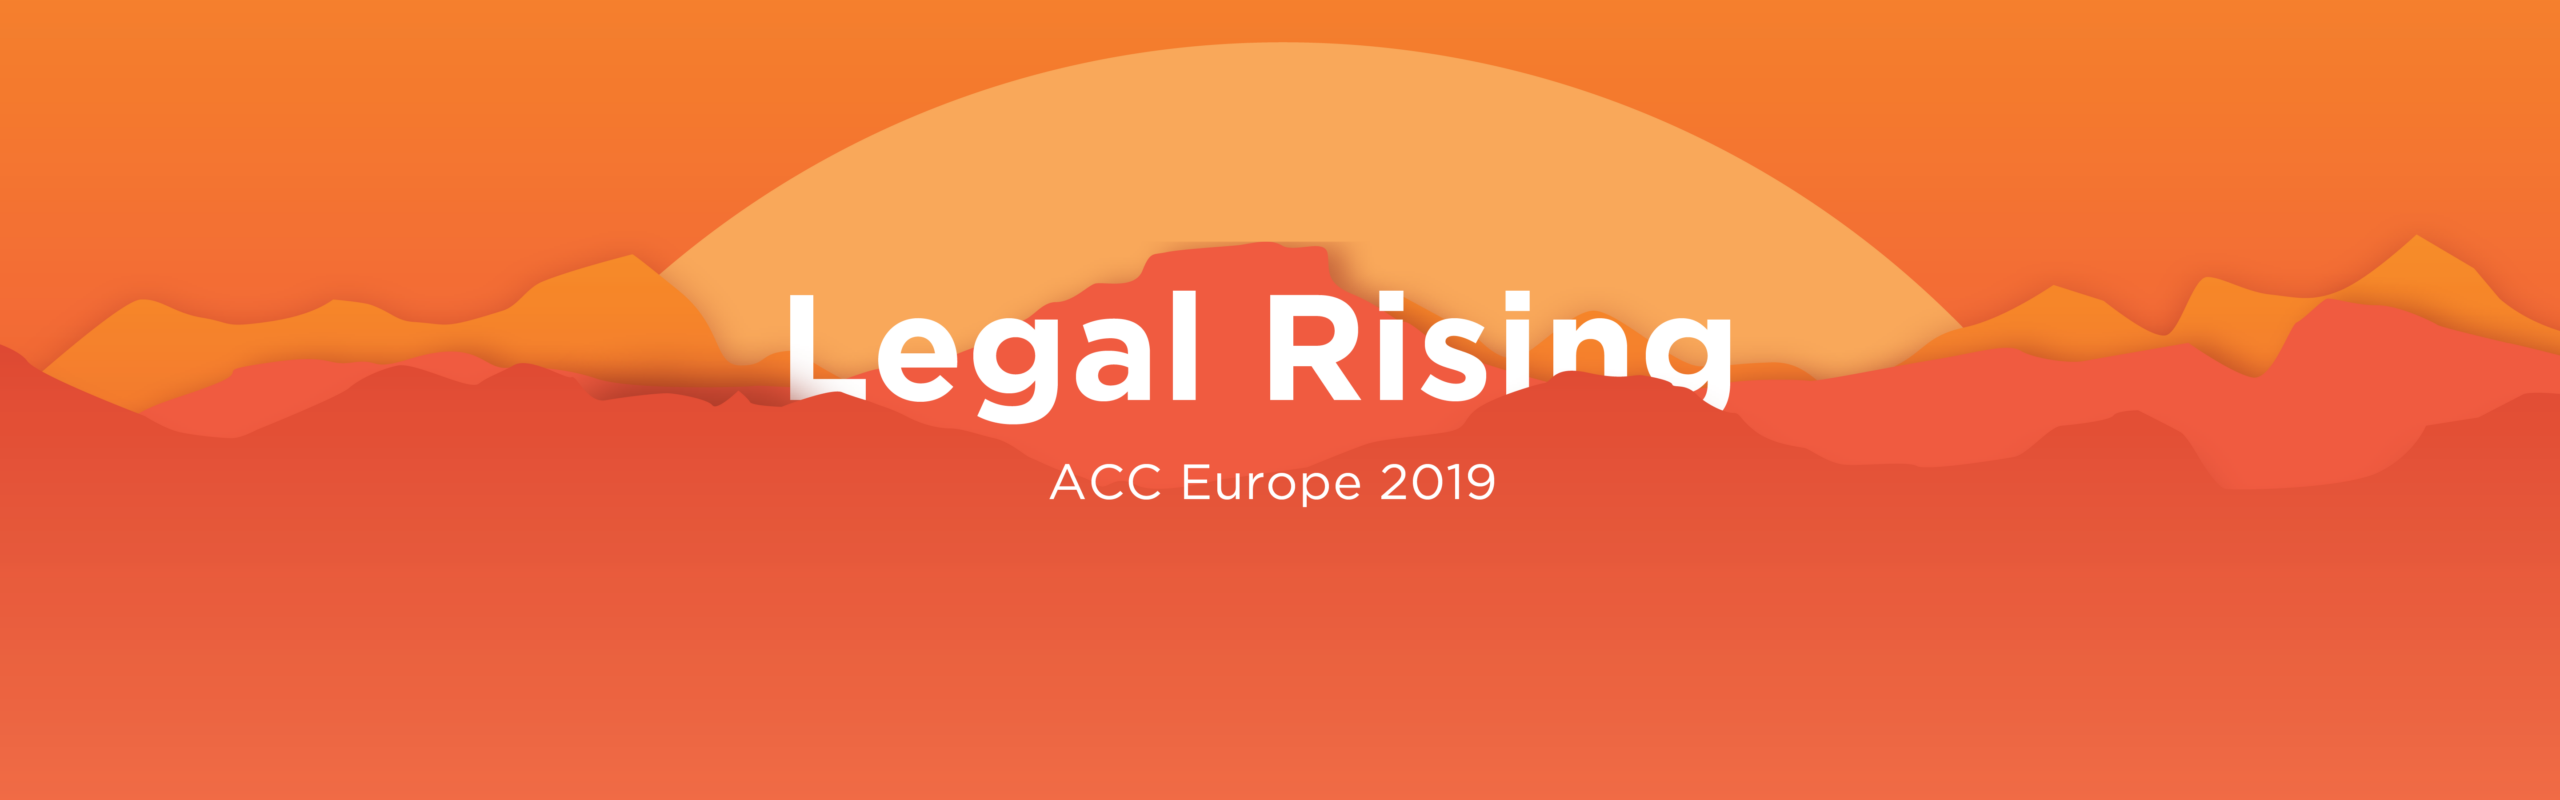 ACC Europe 2019 Blog Post Header